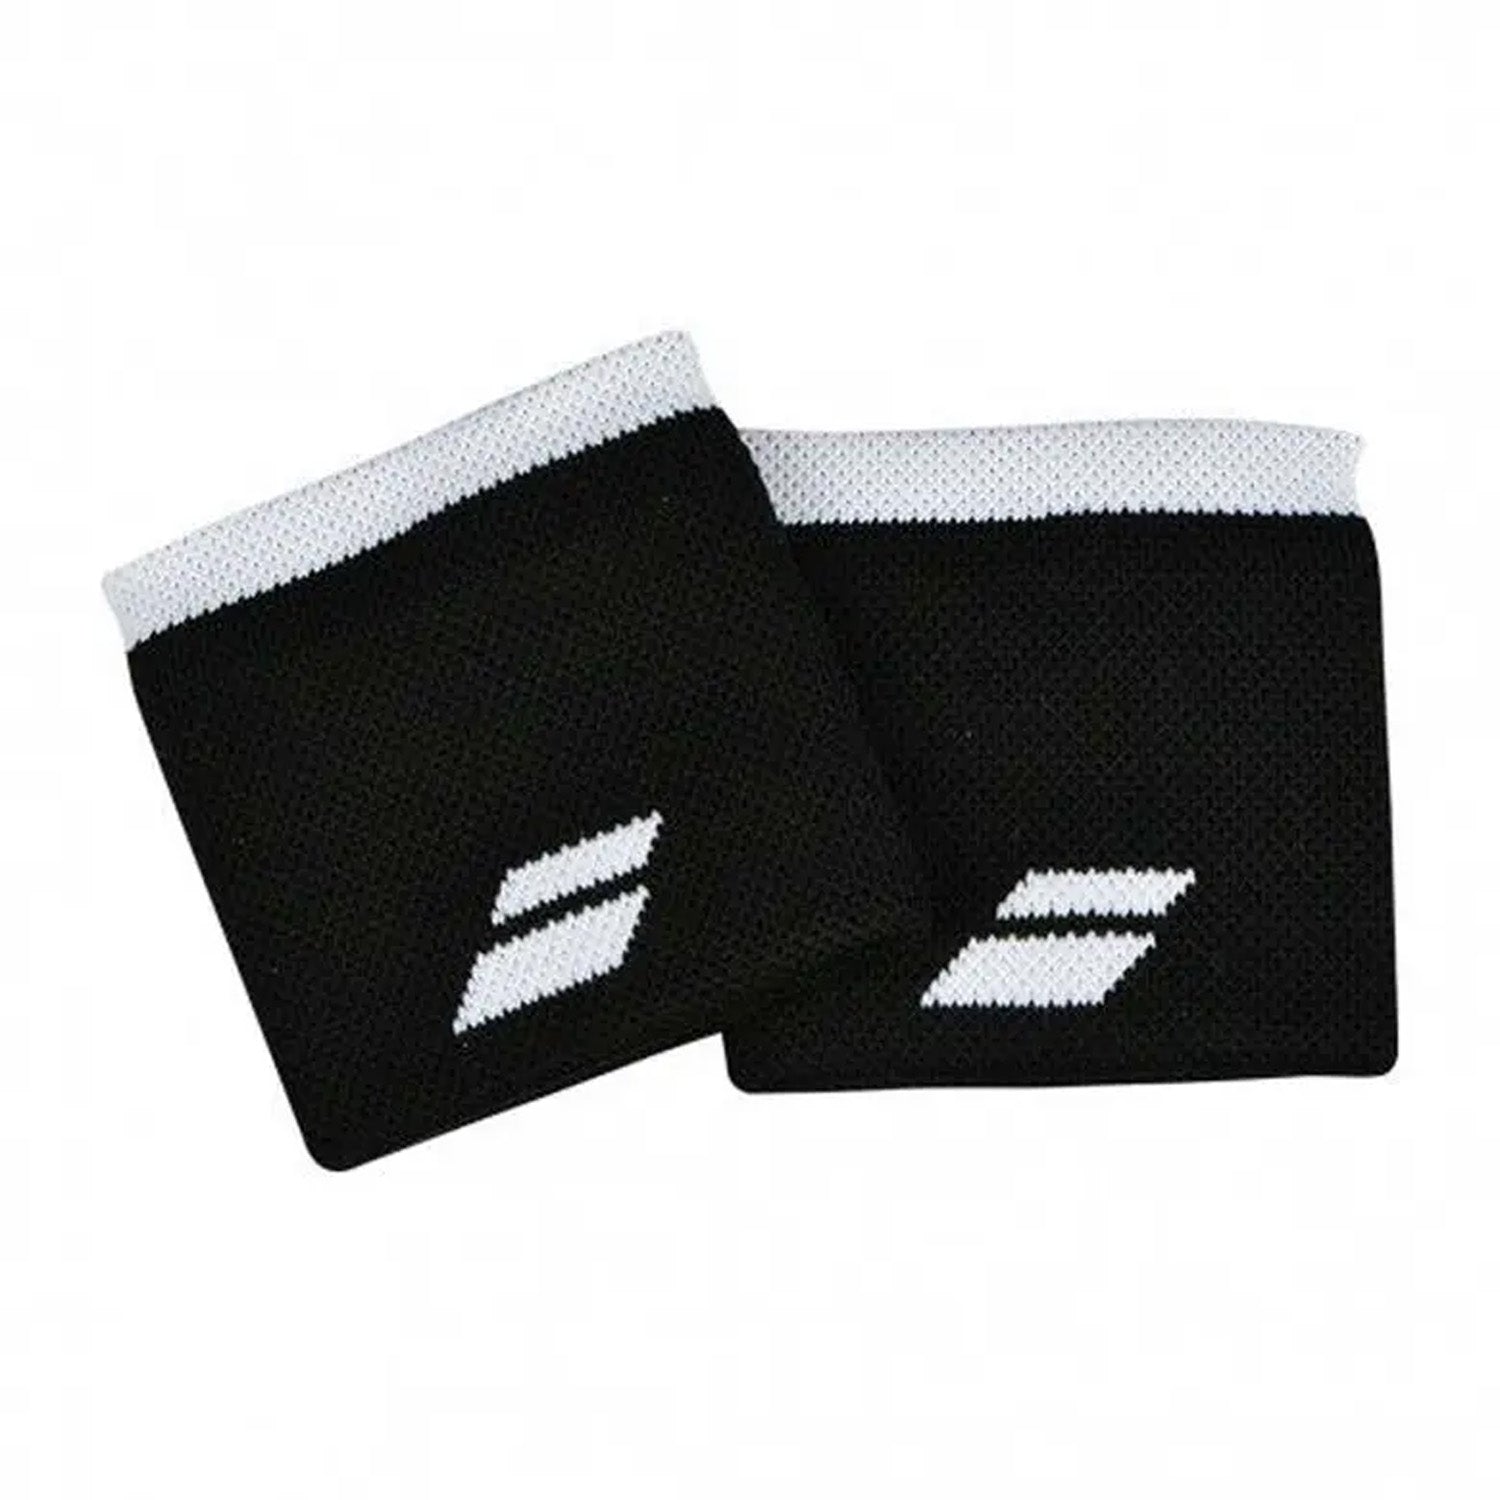 Babolat Logo Jumbo WristBand, Black/White - Best Price online Prokicksports.com